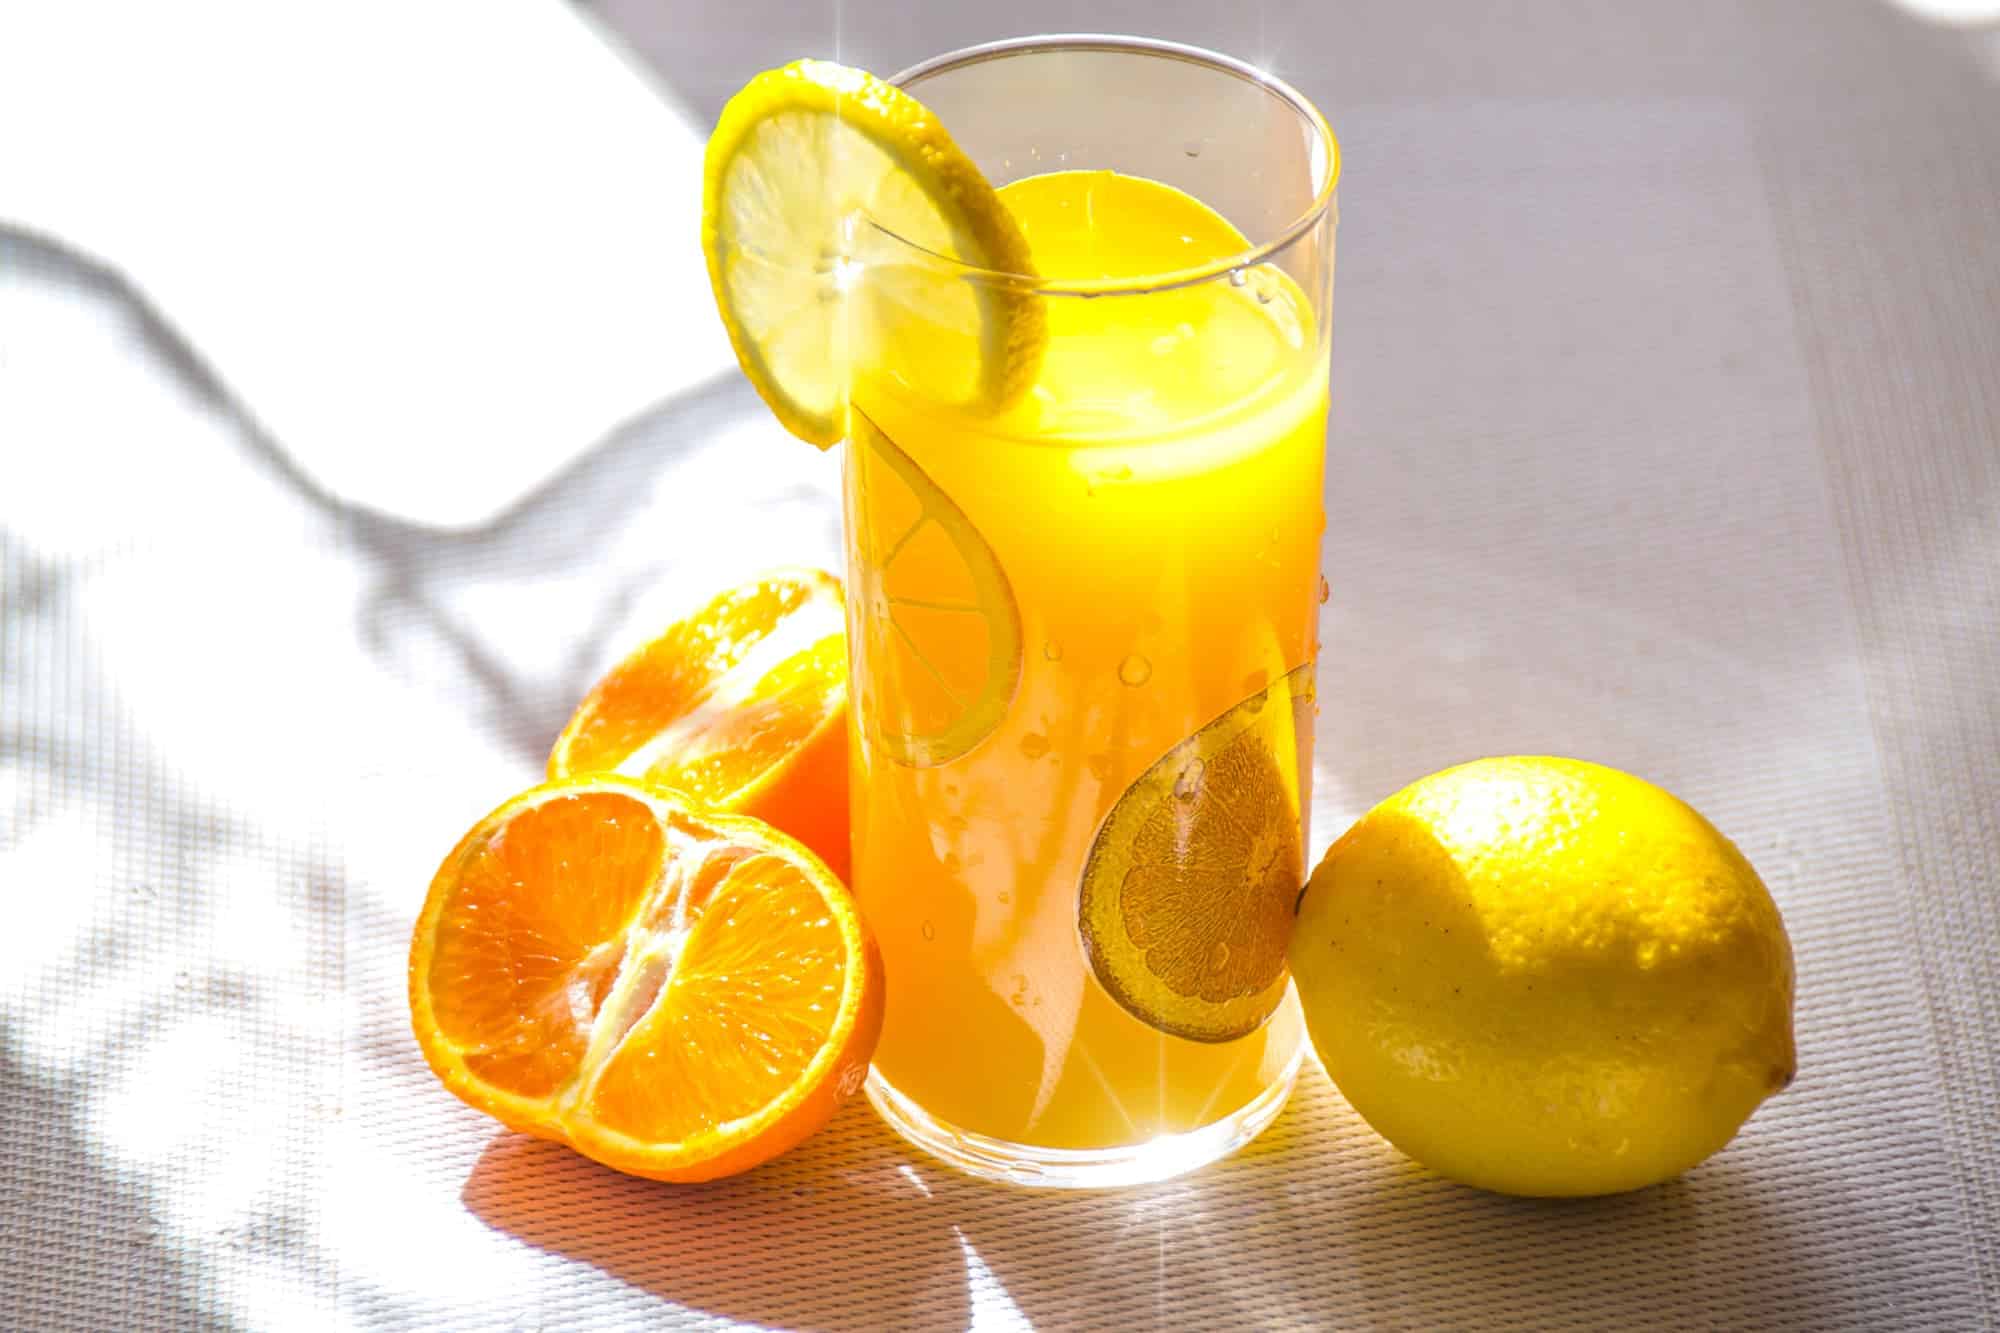 Use orange juice as a washer when taking kratom from a spoon